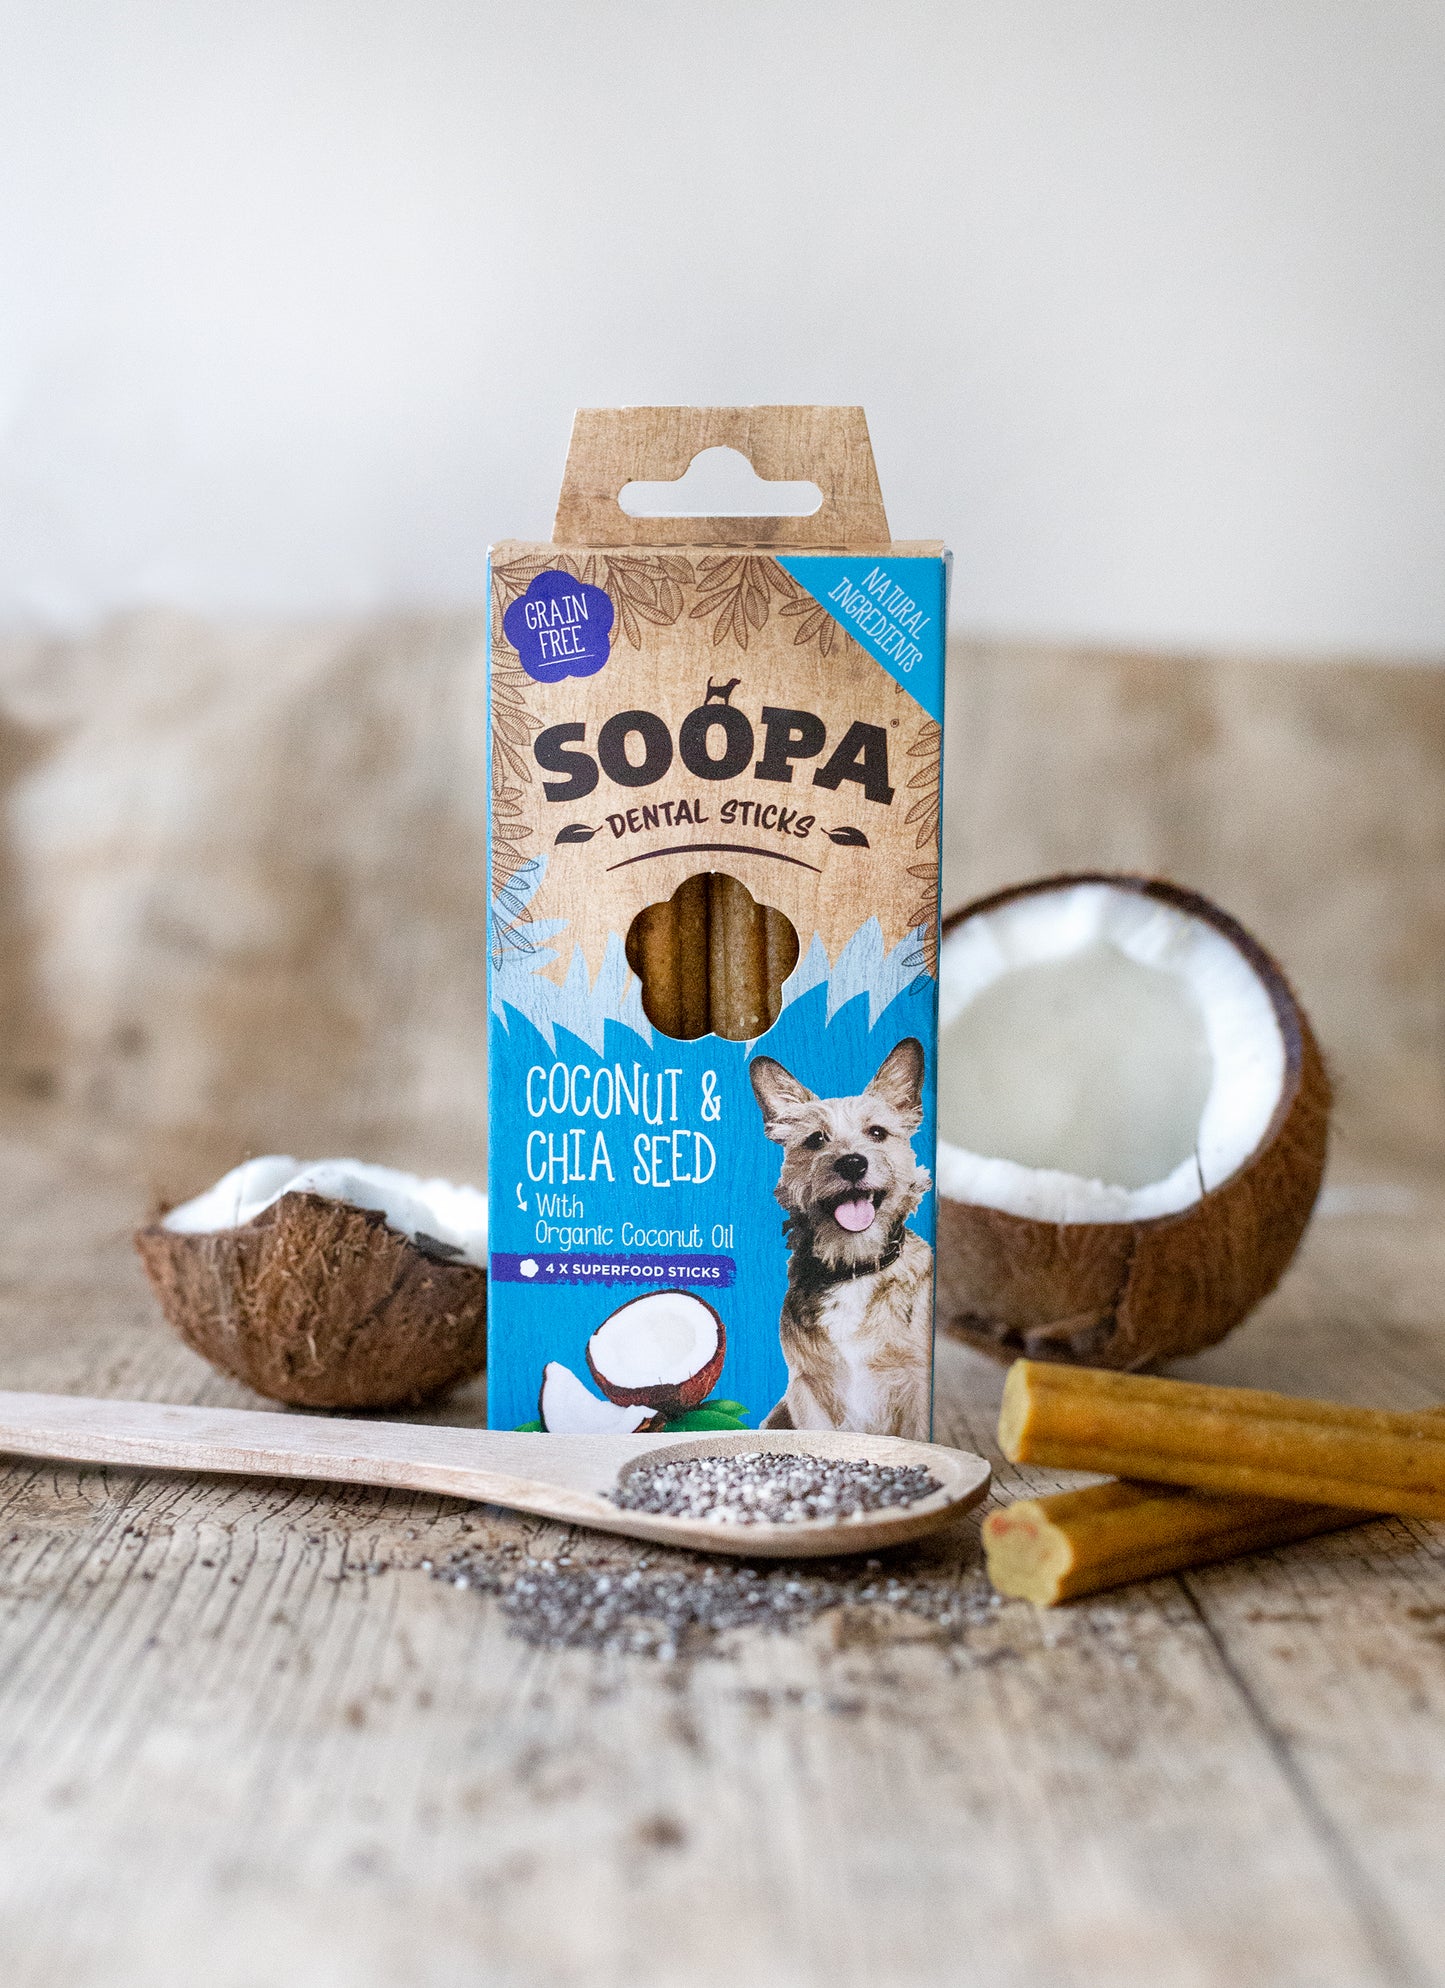 Soopa Dental Sticks Coconut and Chia Seed